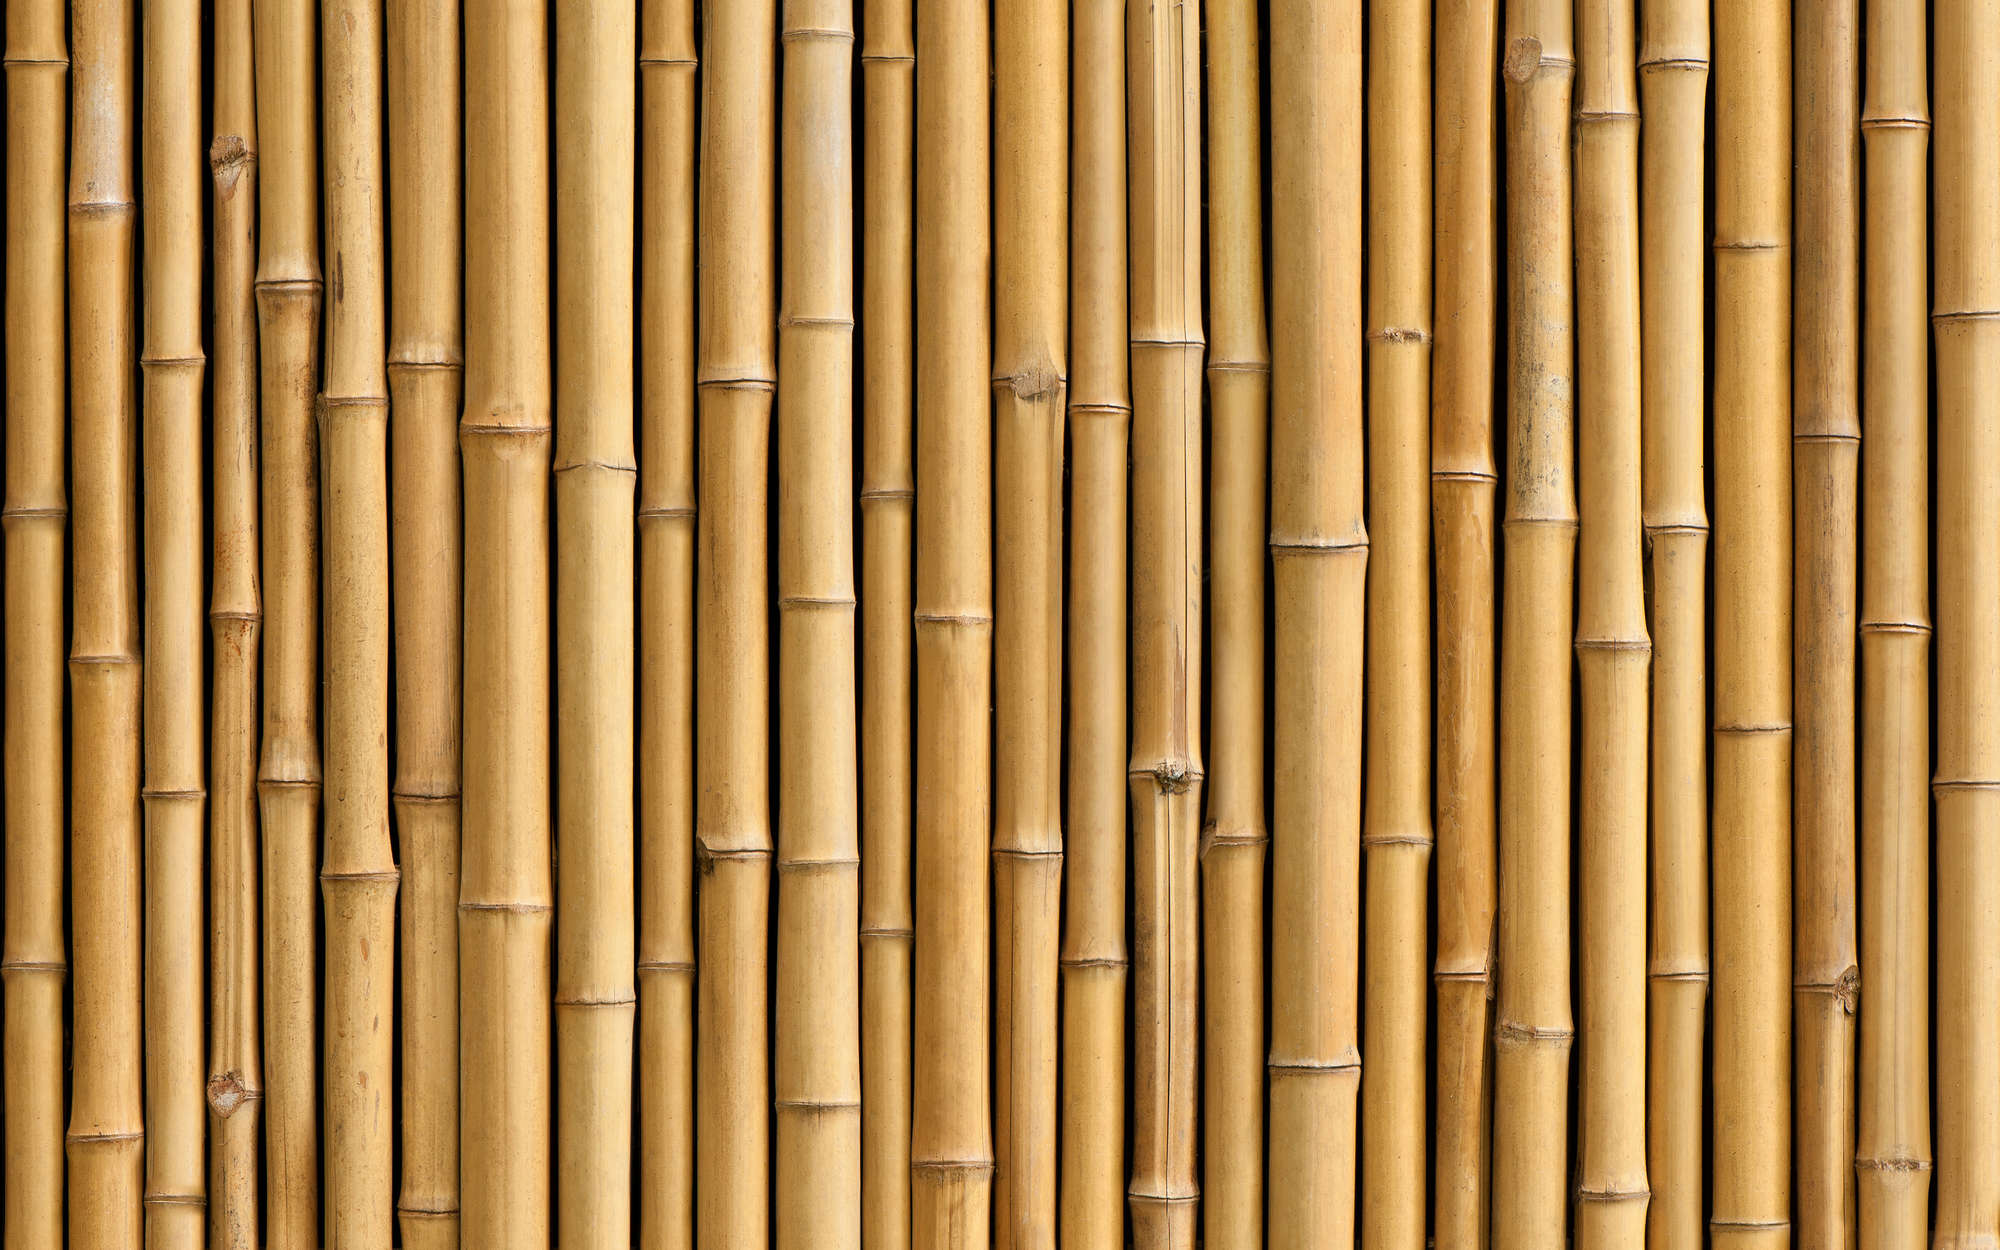             Fototapete Wand aus Bambus in Beige – Perlmutt Glattvlies
        